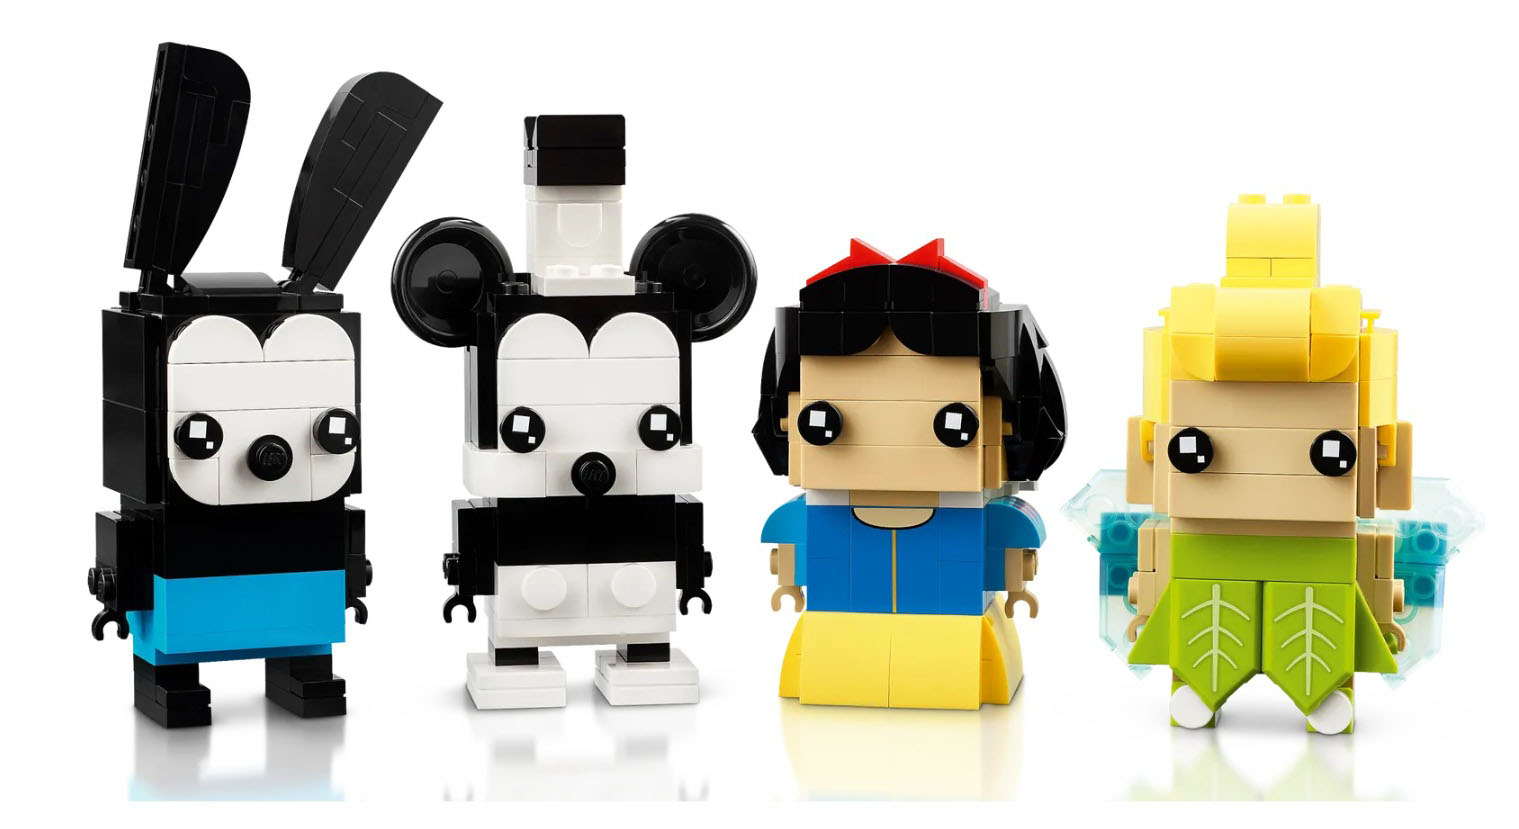 LEGO(R) 40622 Disney 100th Celebration Brickheadz Officially Revealed | New Set for February 1st 2023